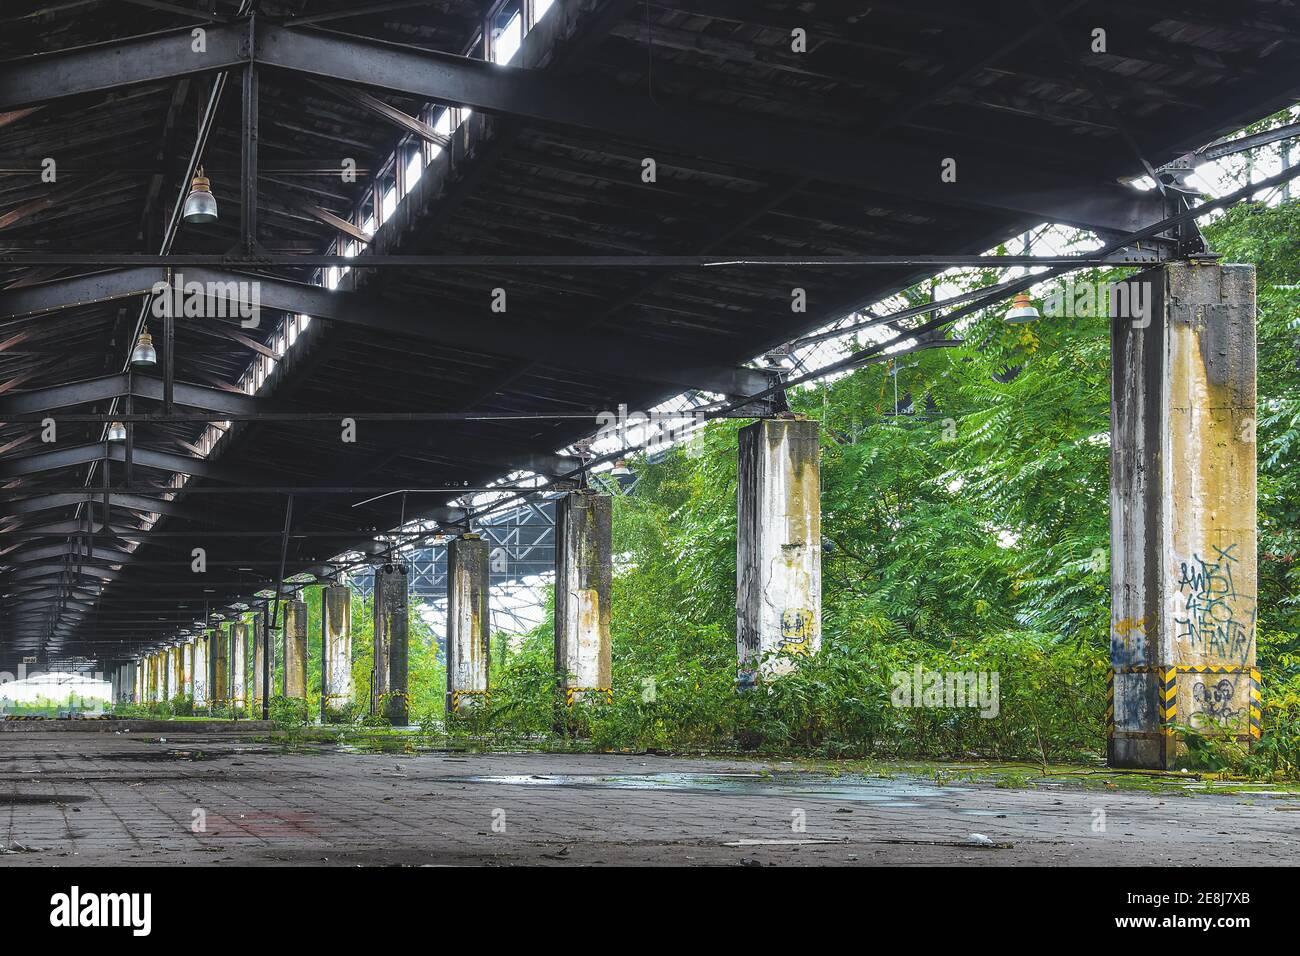 Ehemaliger Güterbahnhof, baufällig, Lost Place, Duisburger Güterbahnhof, Duisburg, Nordrhein-Westfalen, Deutschland Stockfoto